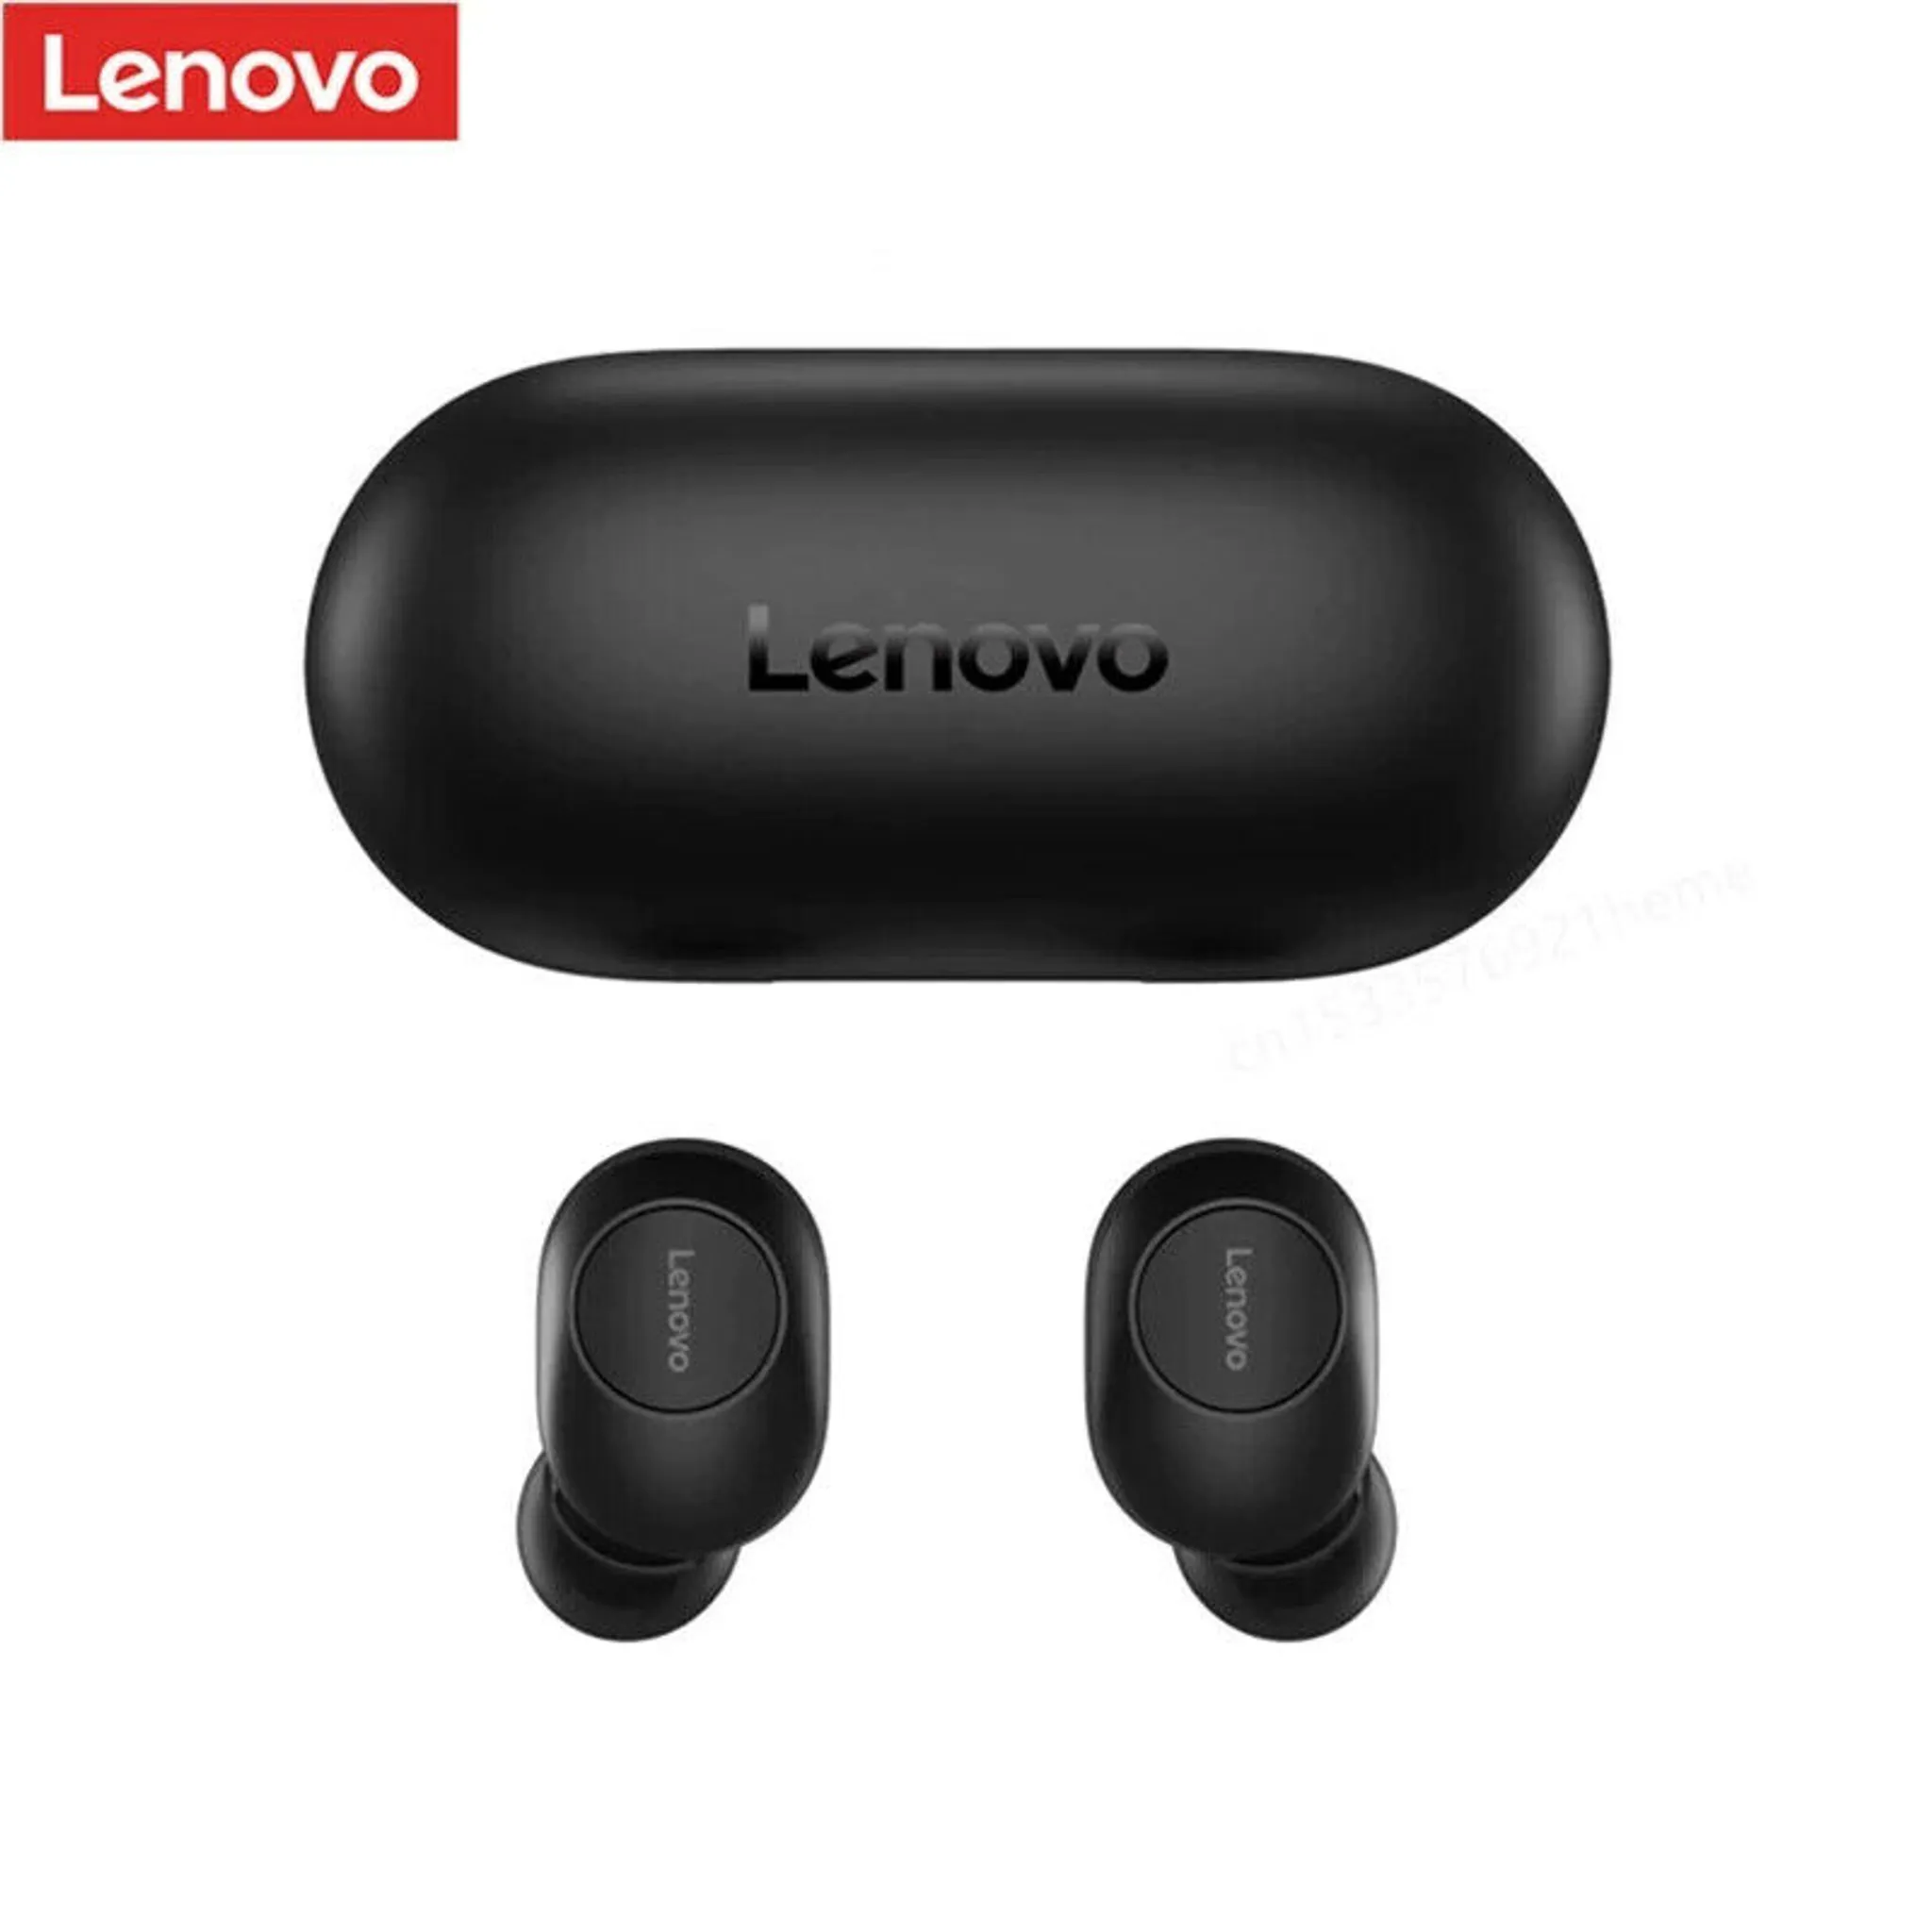 kaufland.de | Lenovo Kopfhörer Bluetooth 5.0